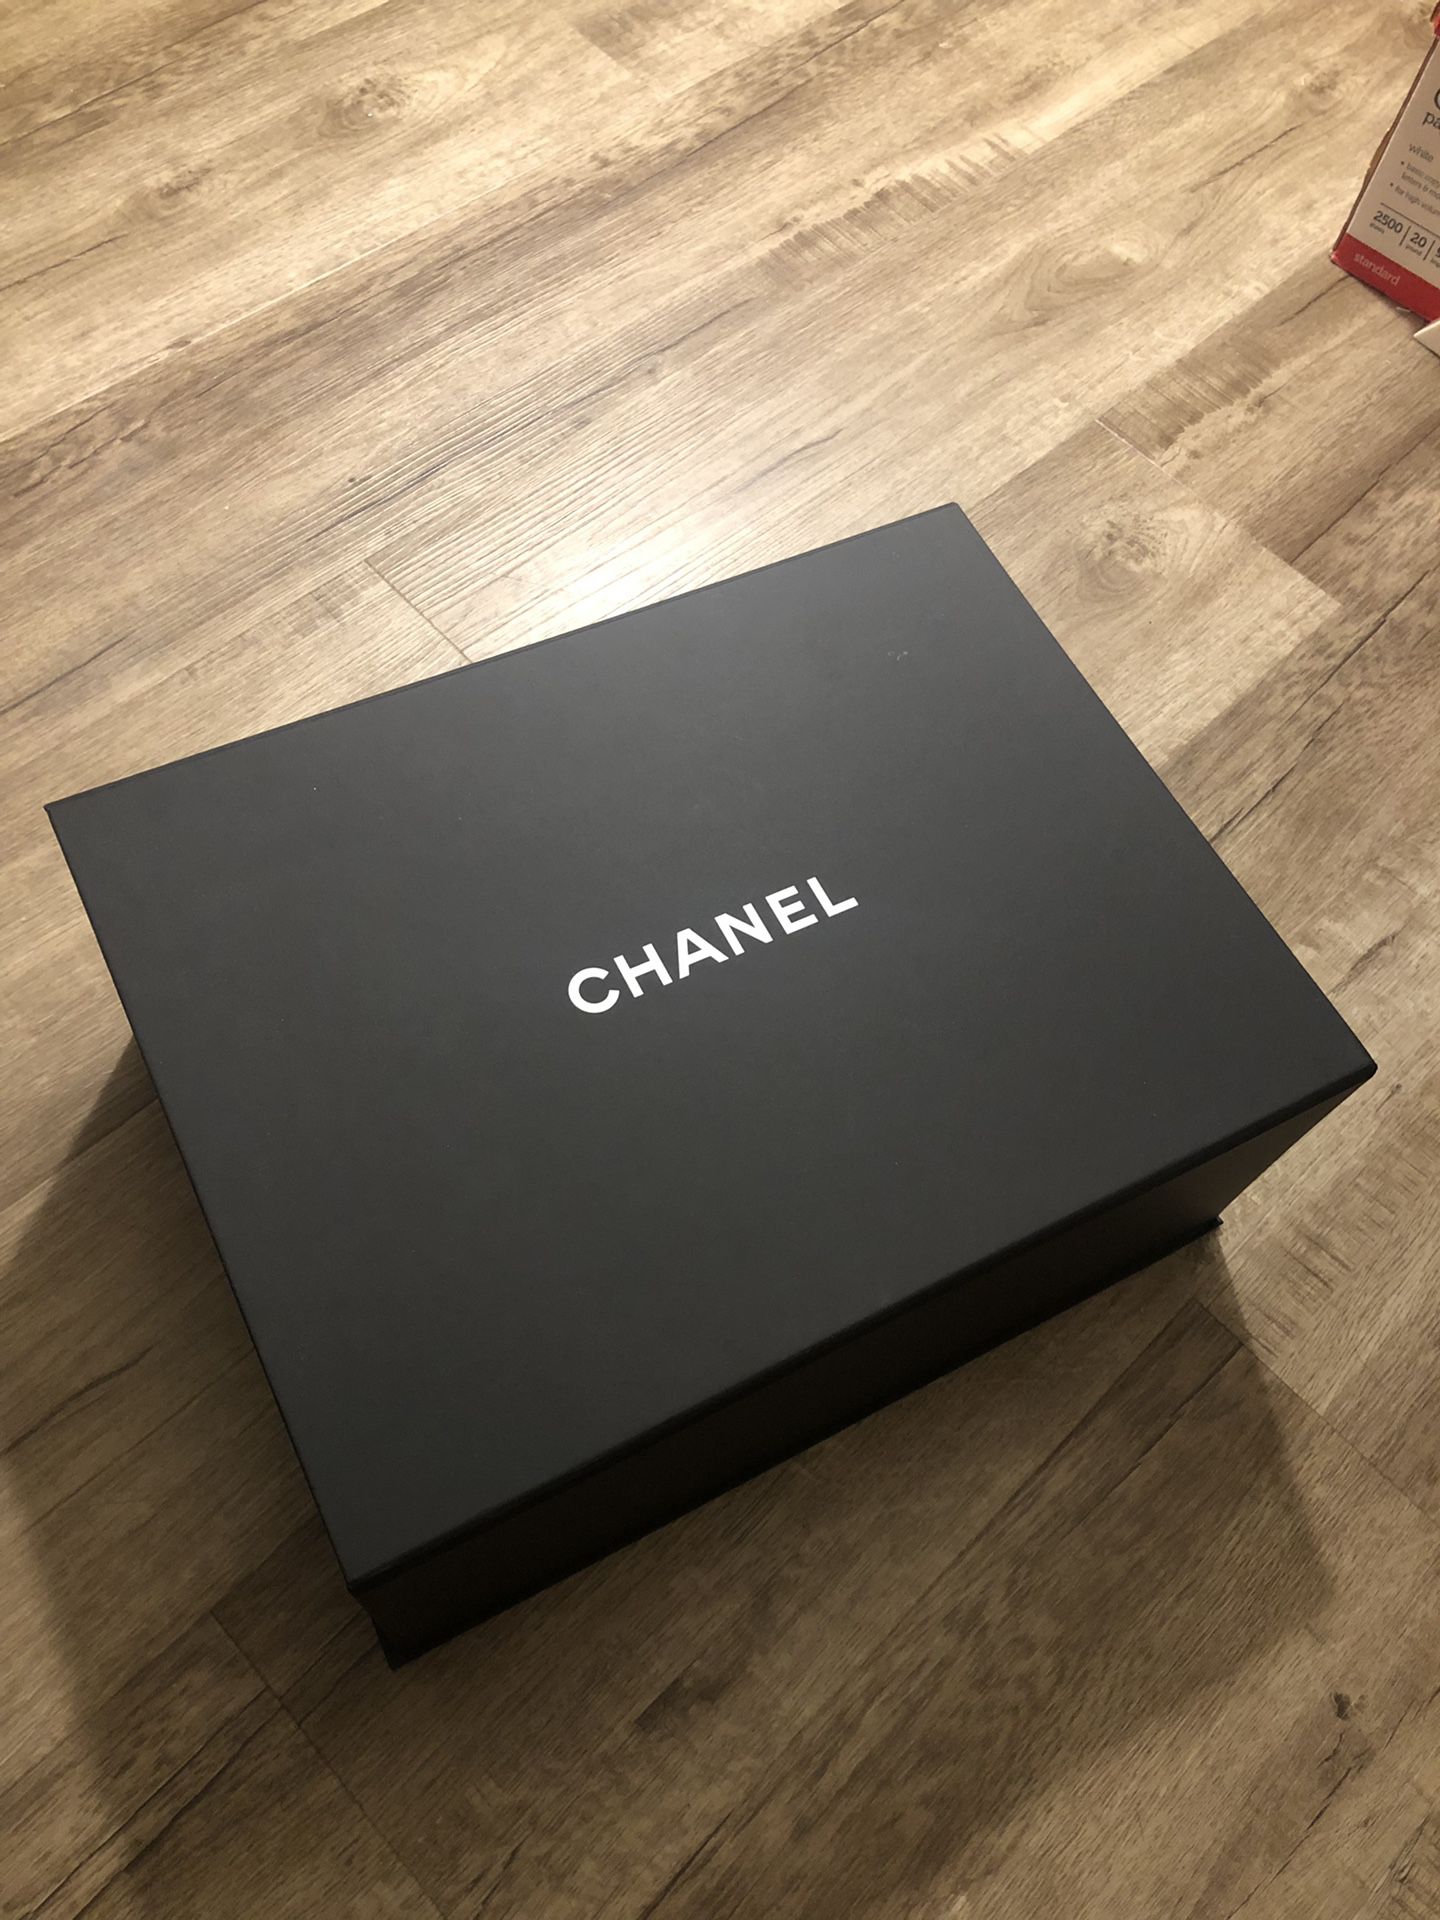 Chanel box (empty) for medium 2.55m